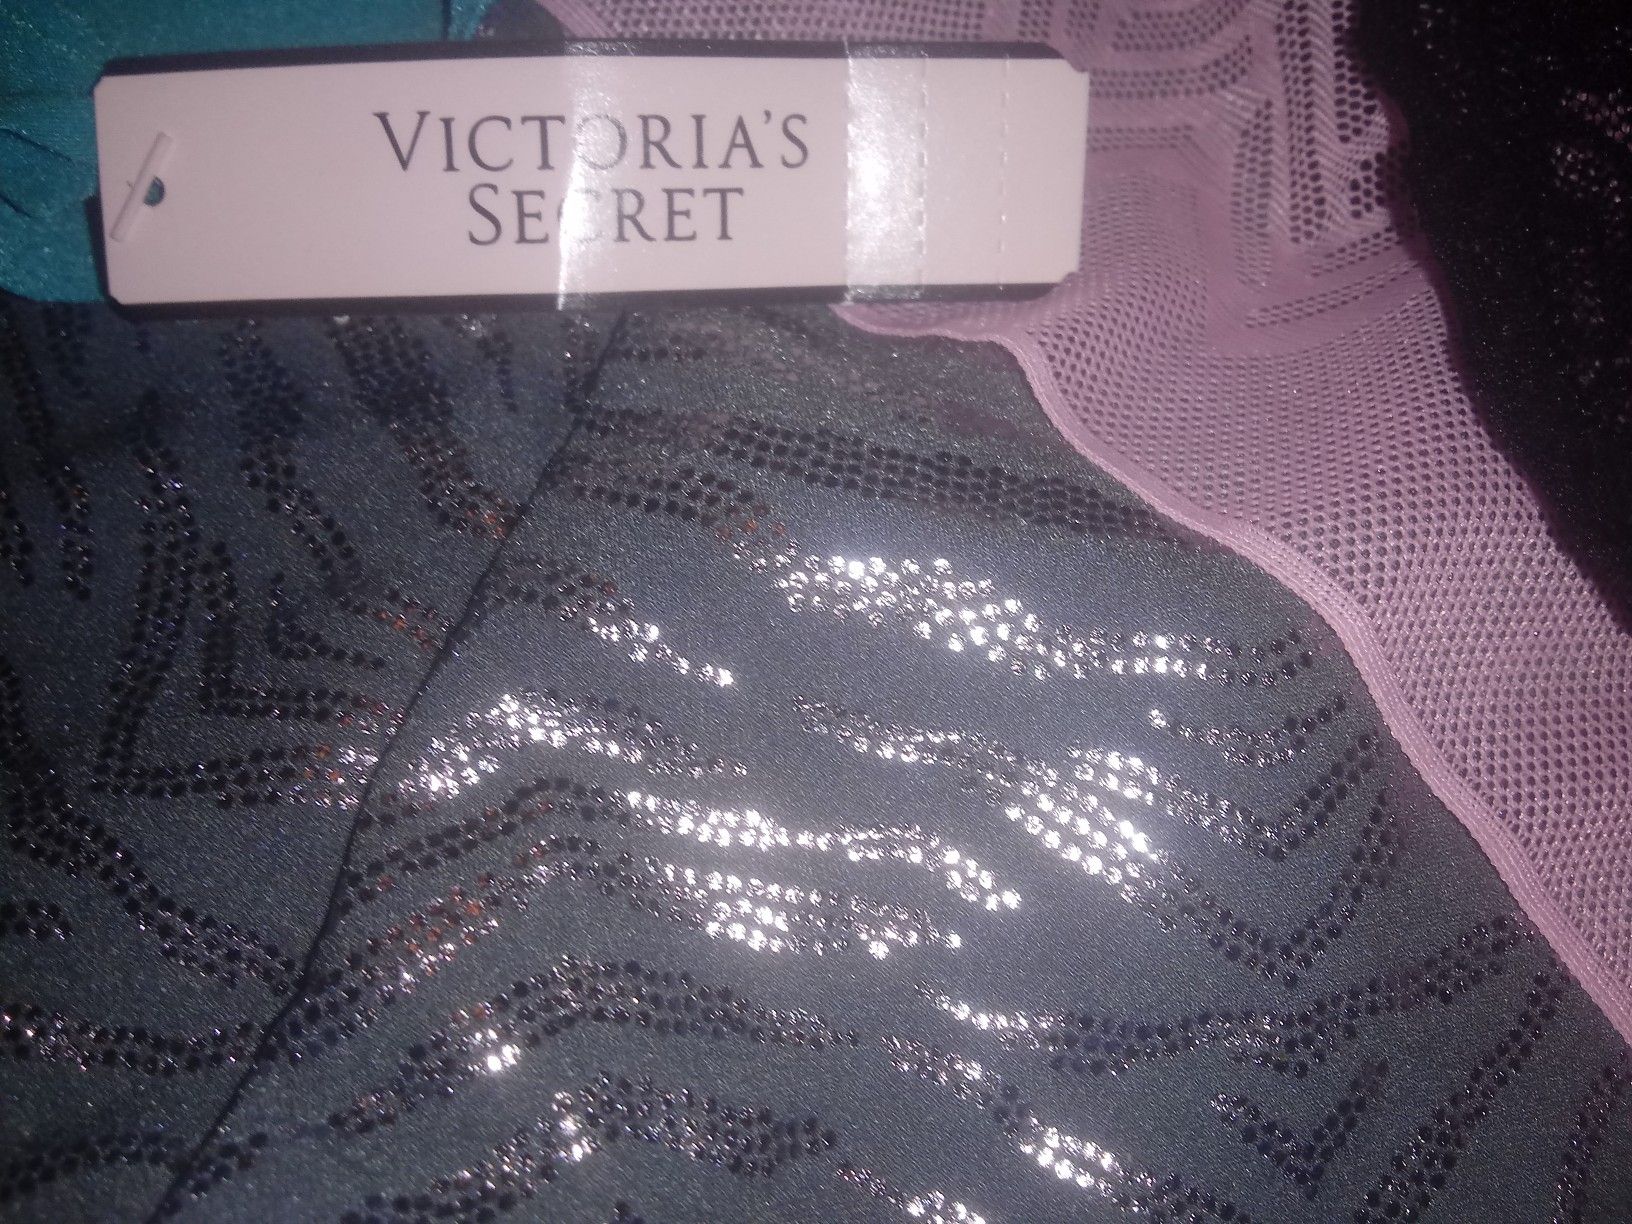 25 pairs of Victoria's secret panties different sizes